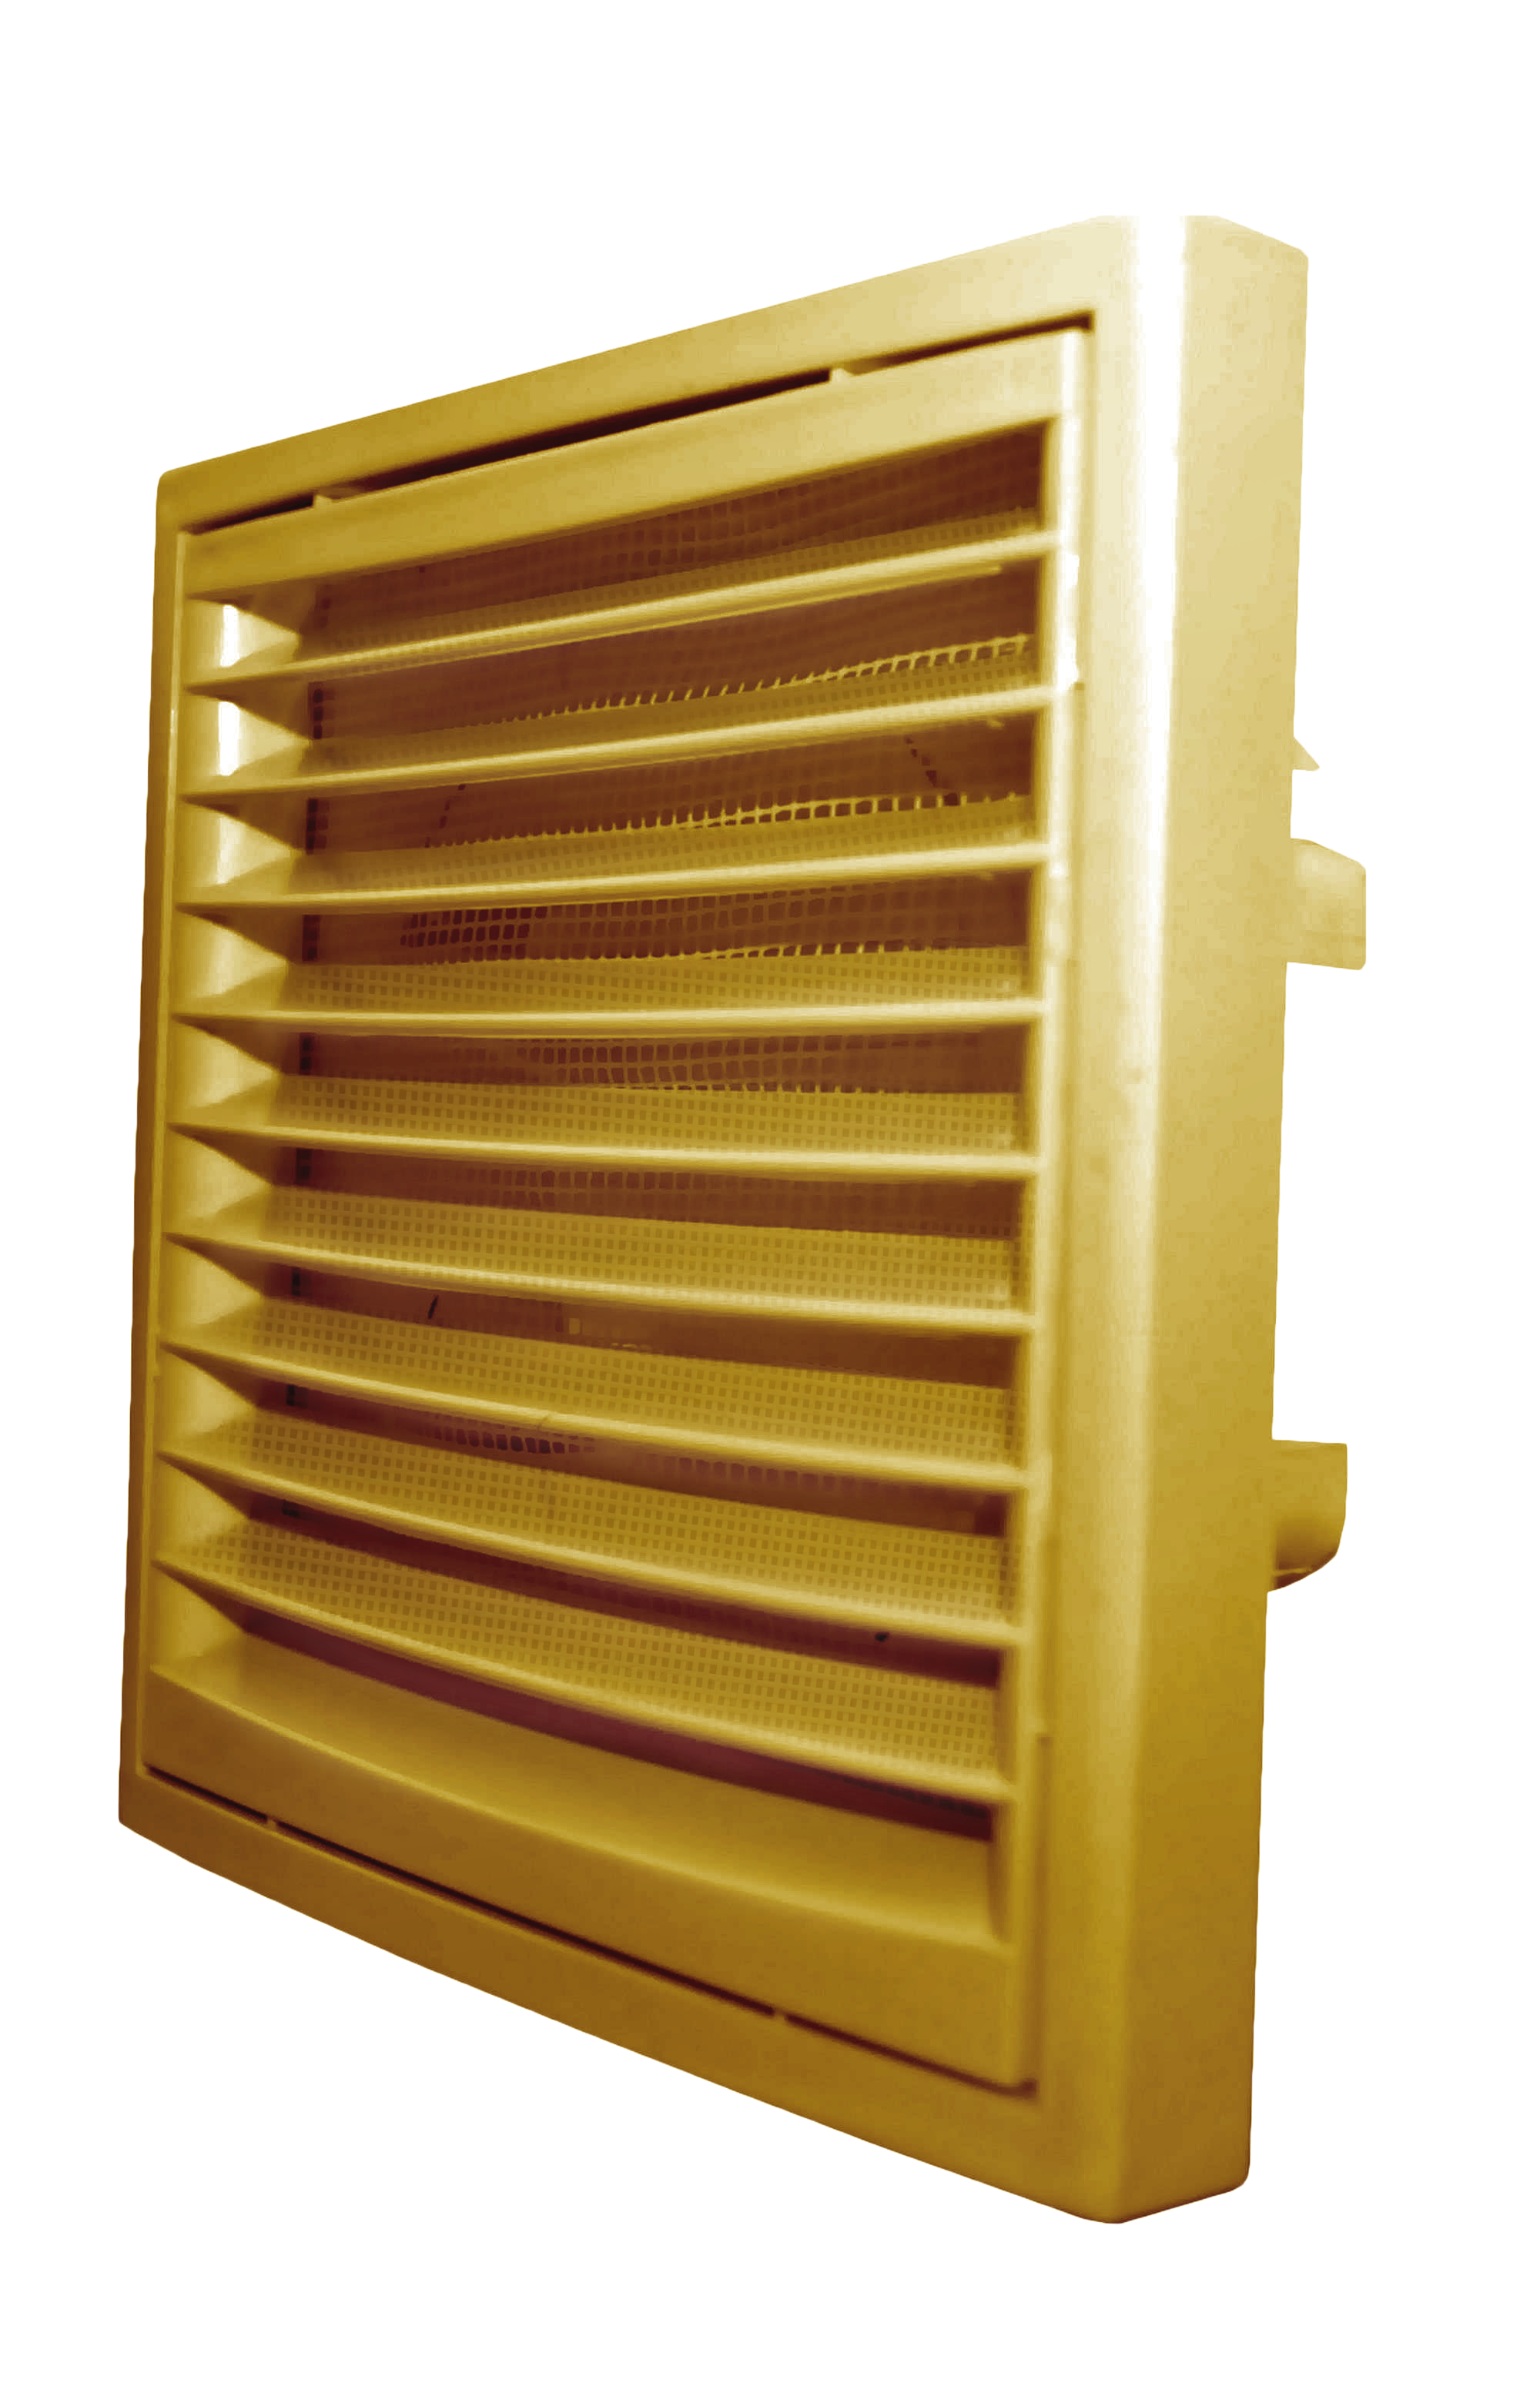 92720716 Решётка вентиляционная KR Ф100/125 140х140 мм пластик цвет золотой STLM-0540480 DOSPEL